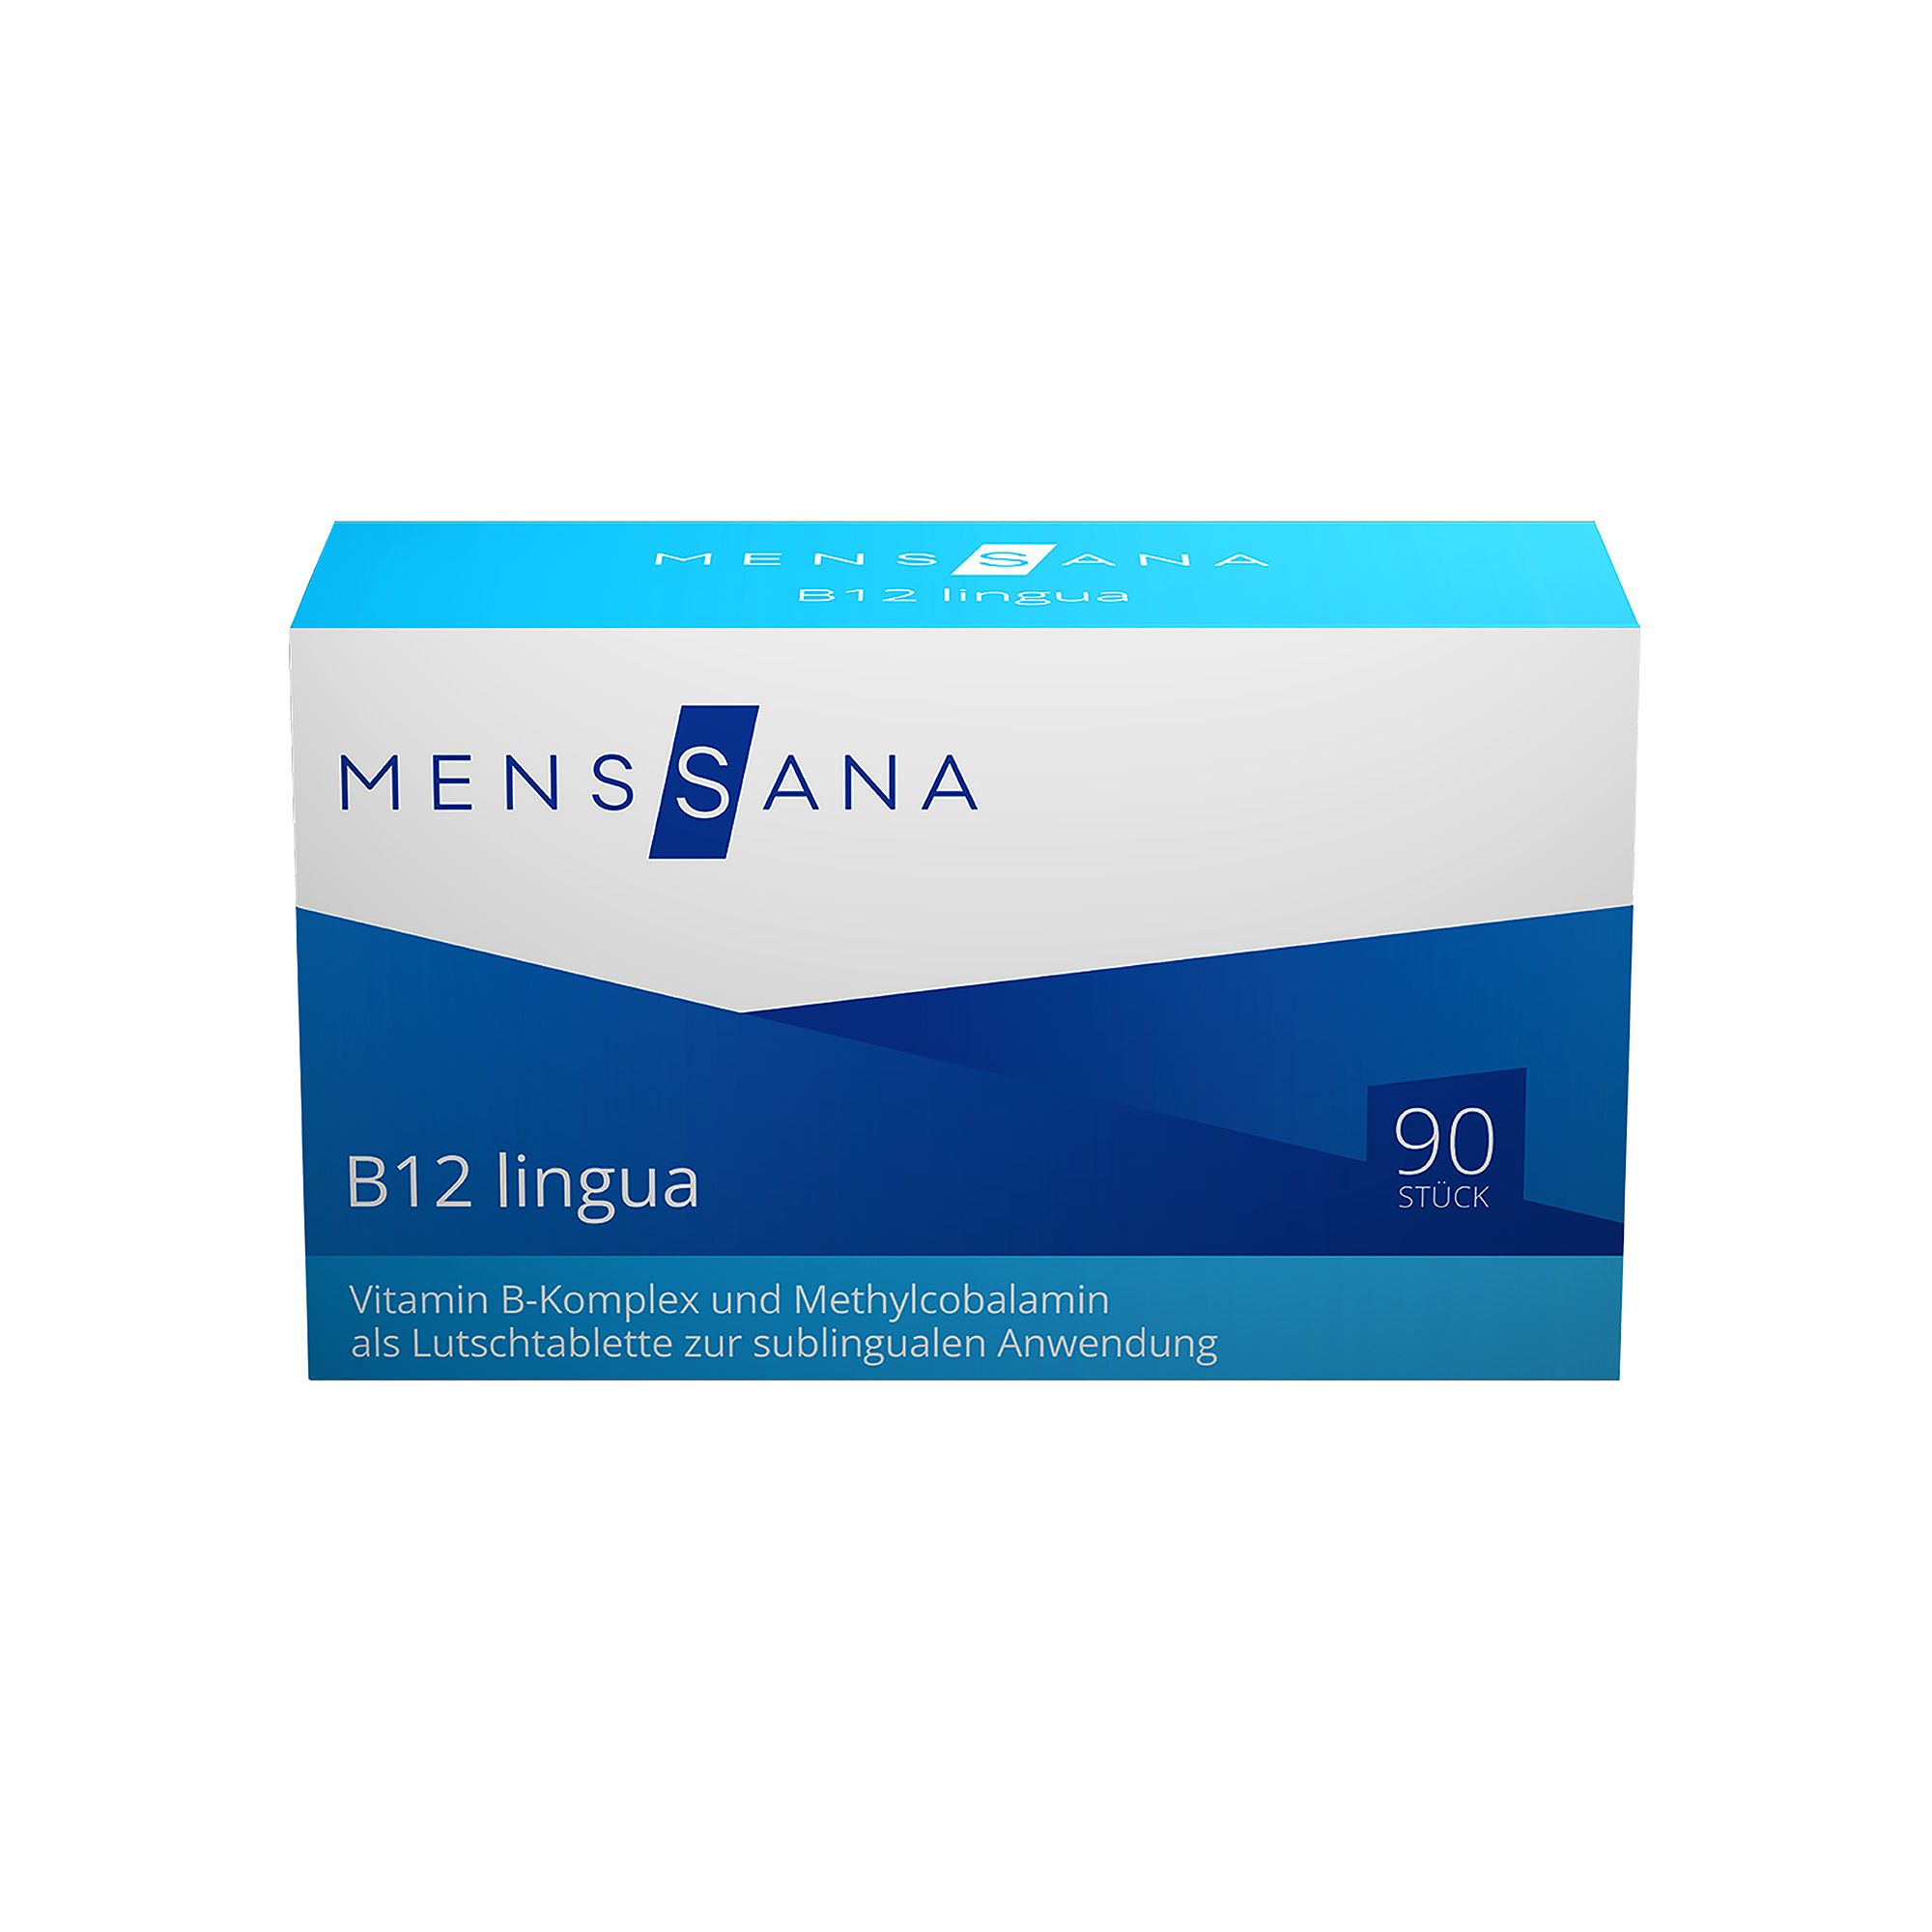 Menssana B12 lingua